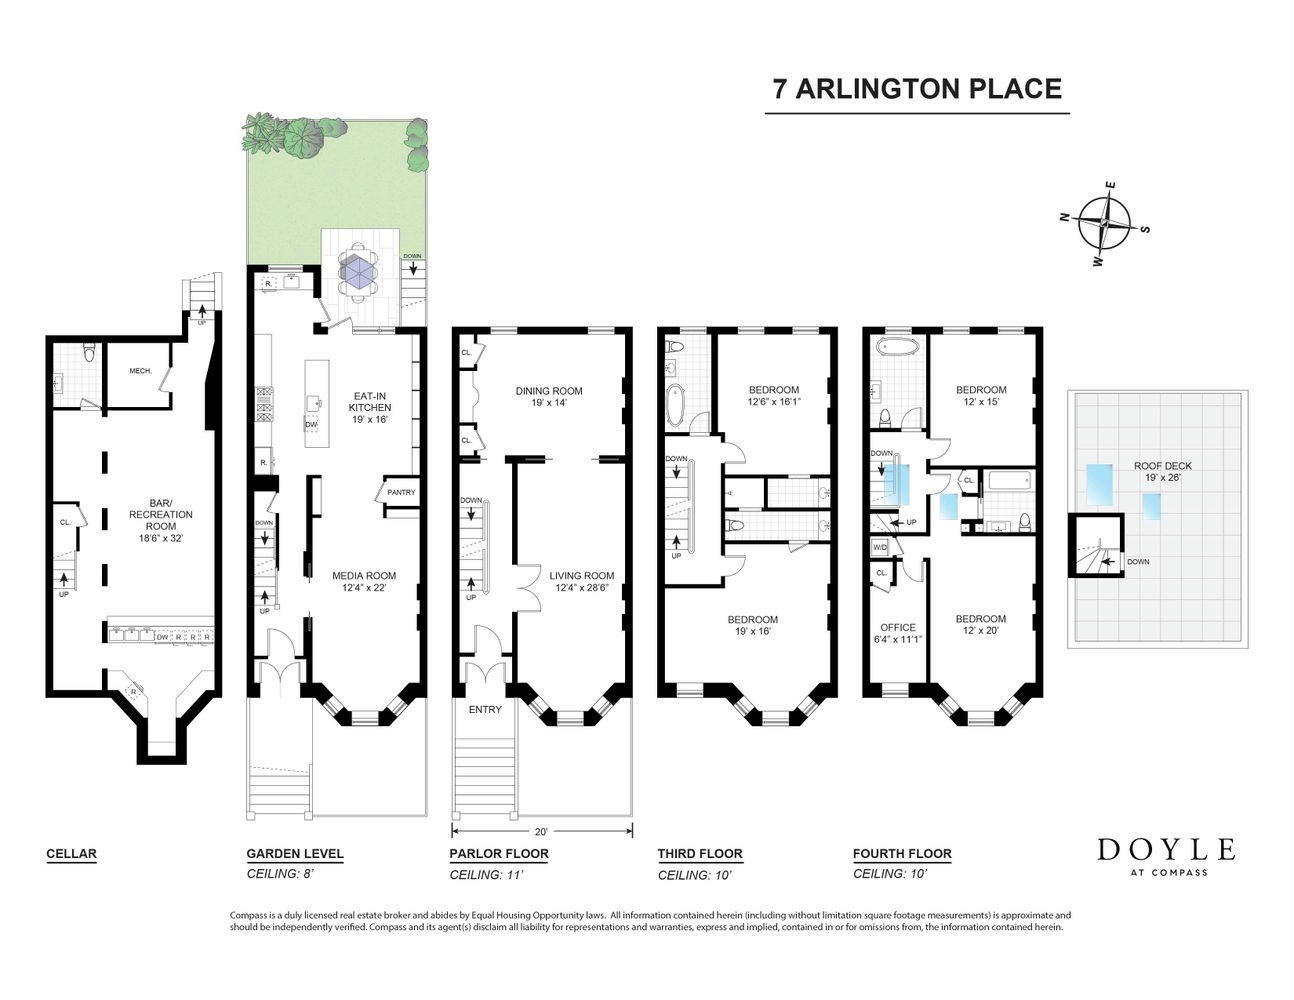 floorplan of 7 arlington place